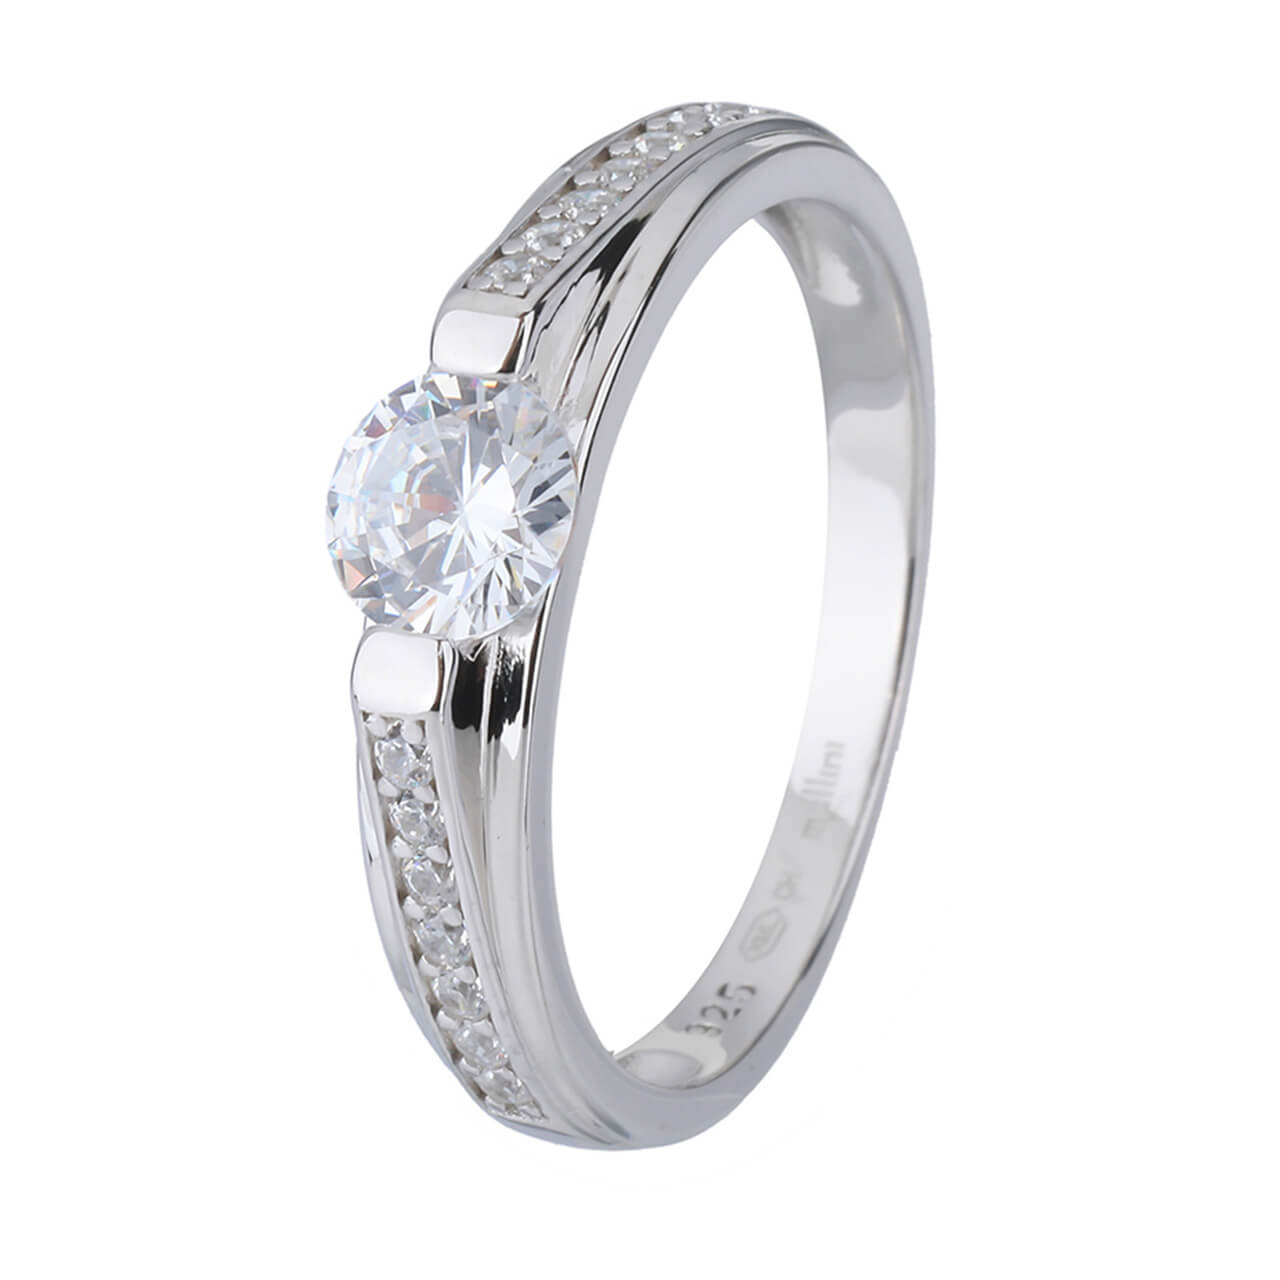 Stříbrný prsten SOLITÉR výrazný Velikost prstenu: 61 Ag 925/1000